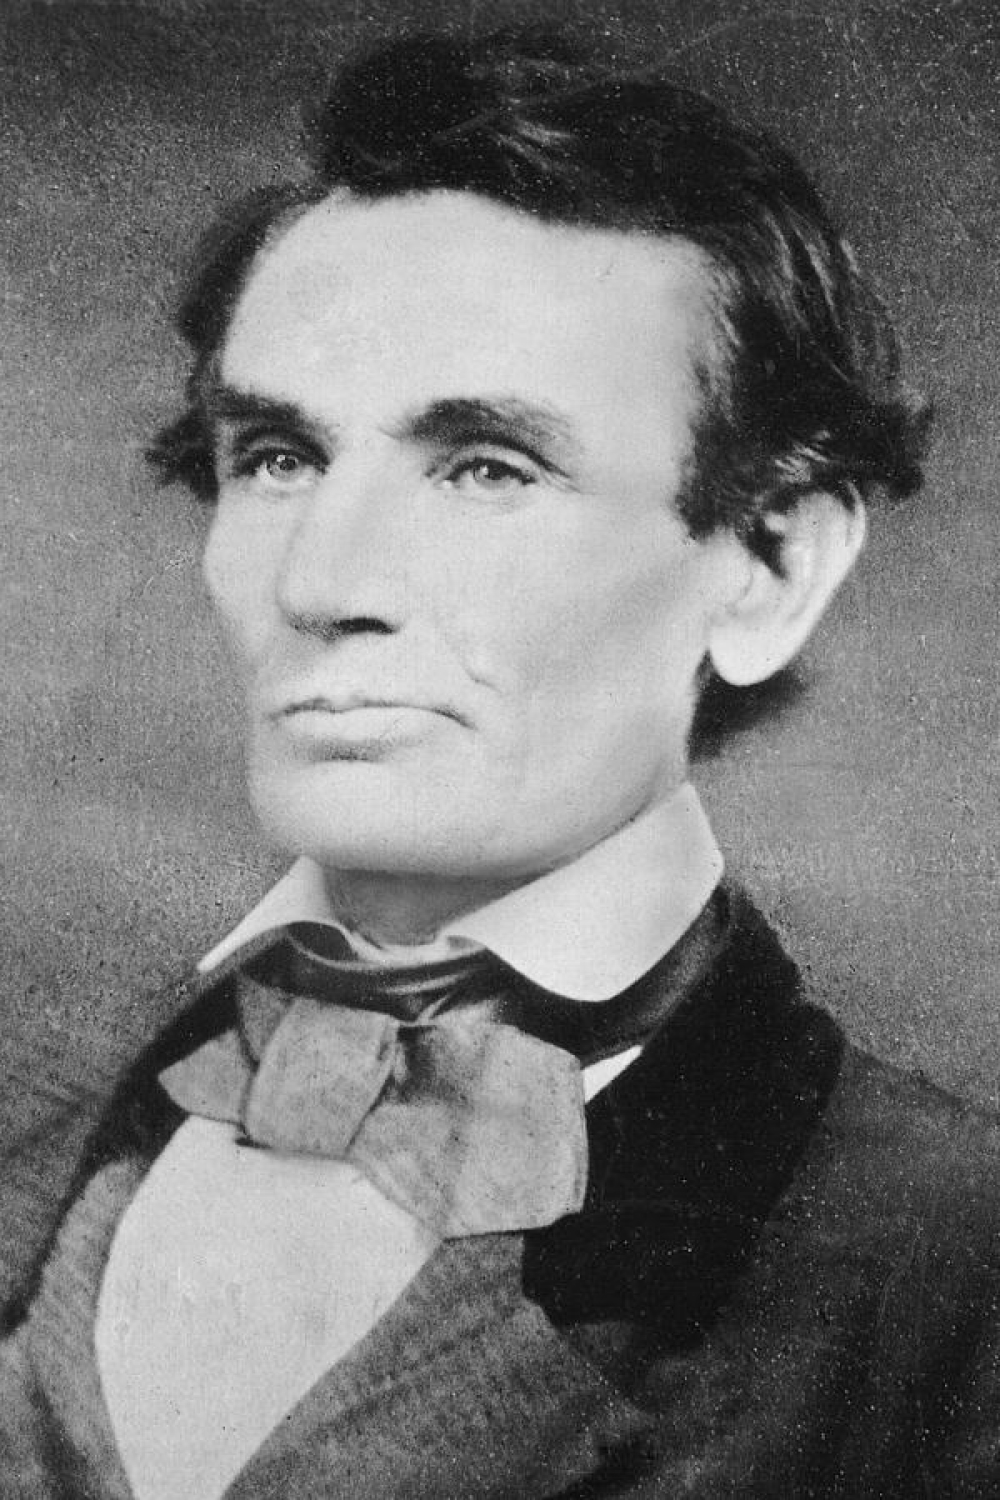 Авраам Линкольн, 1858